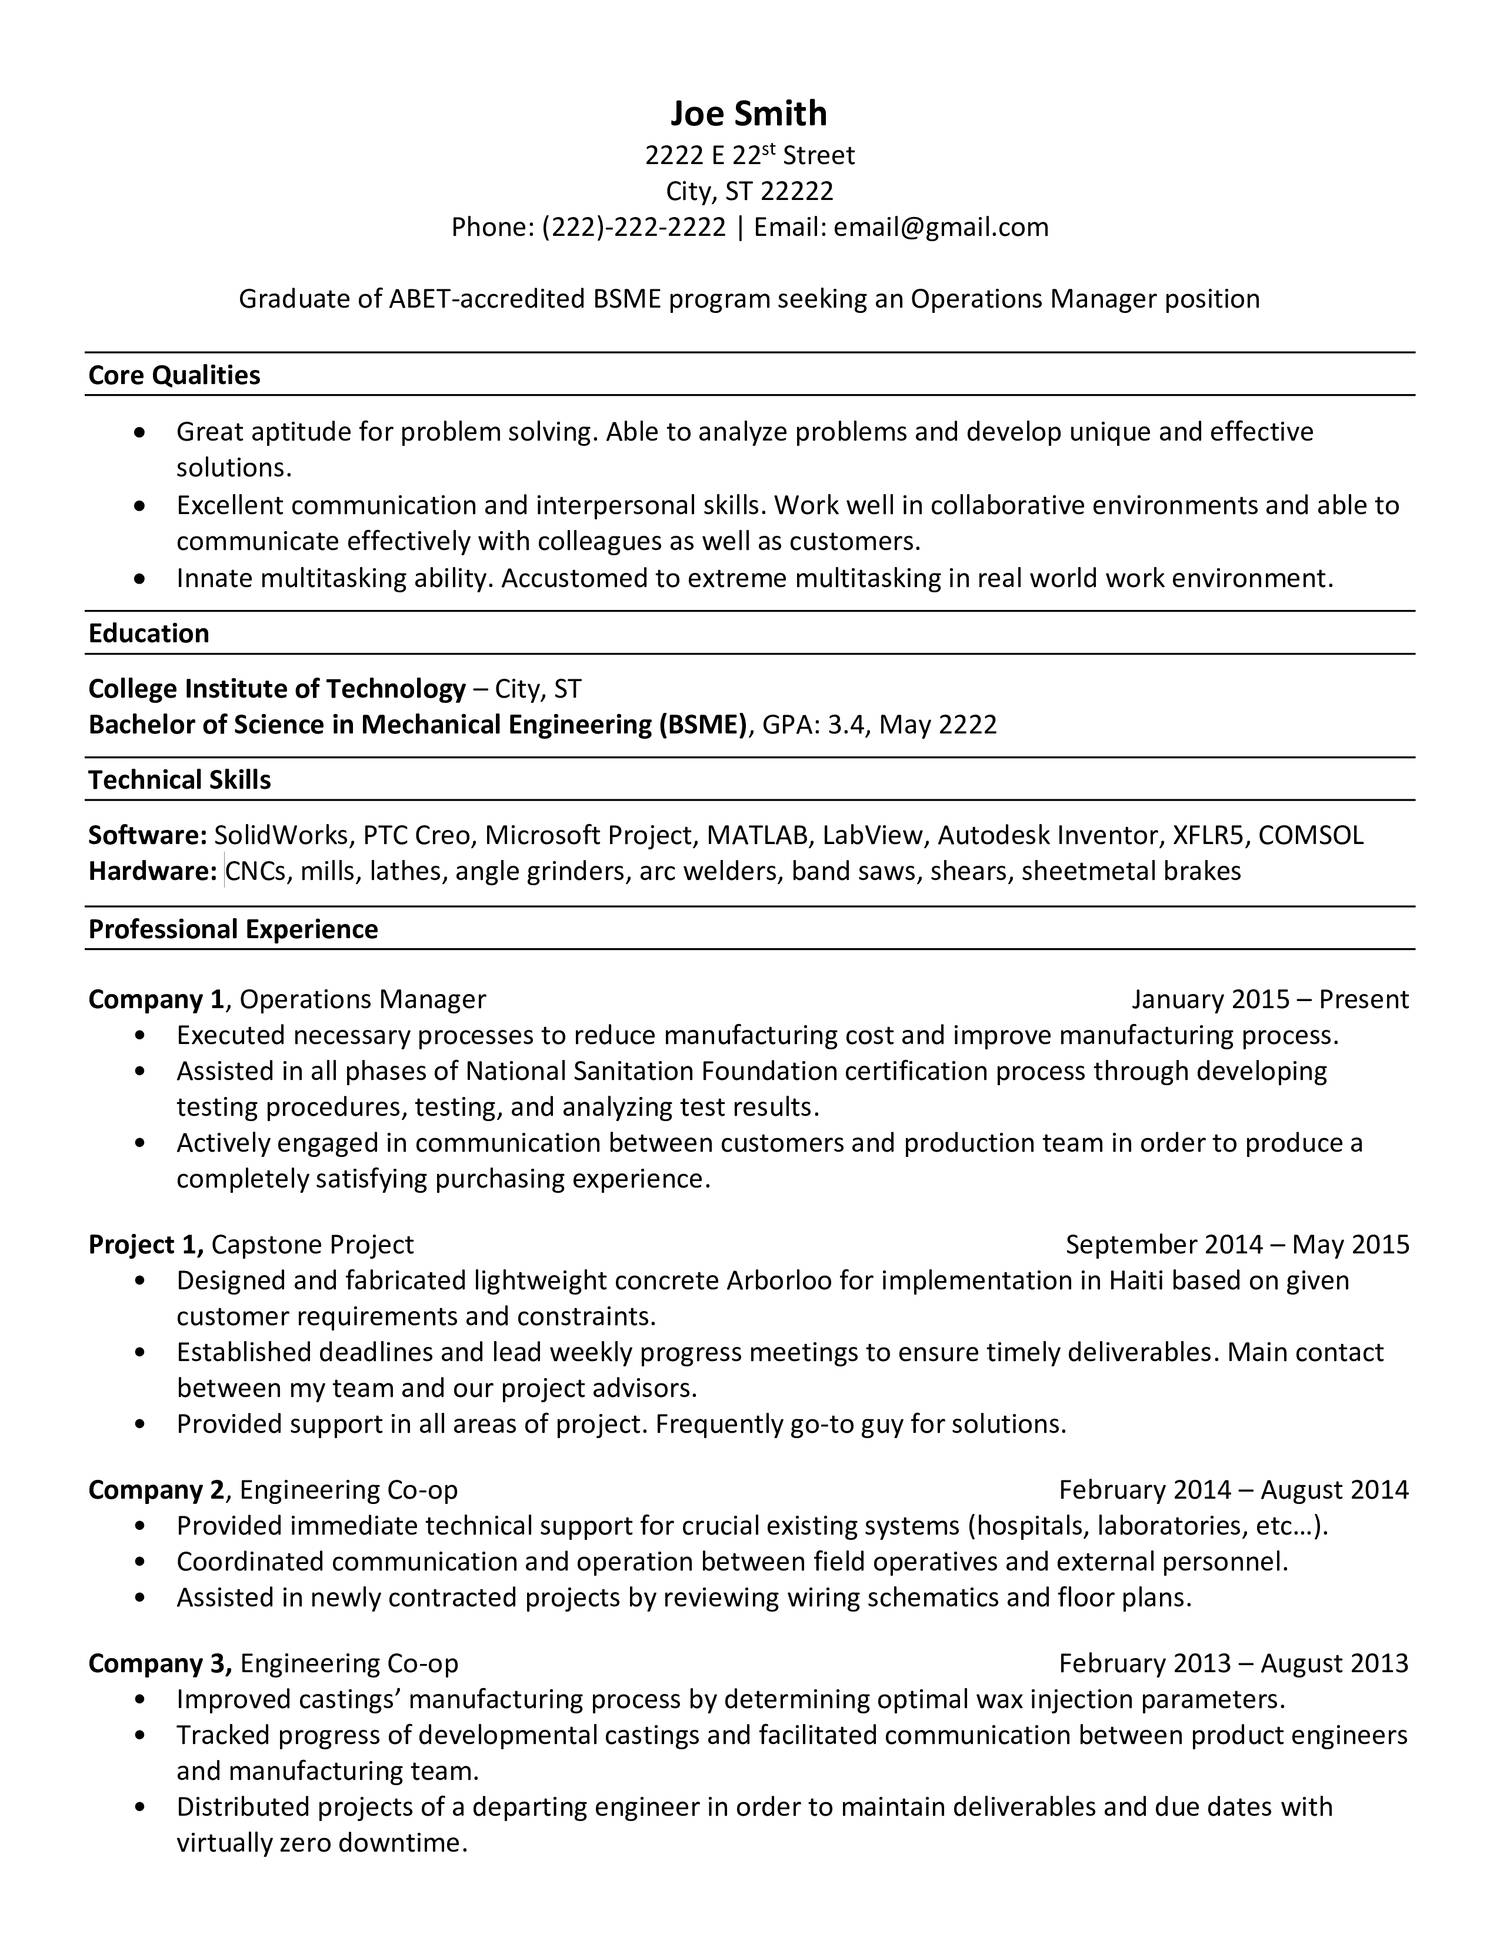 resume templates reddit